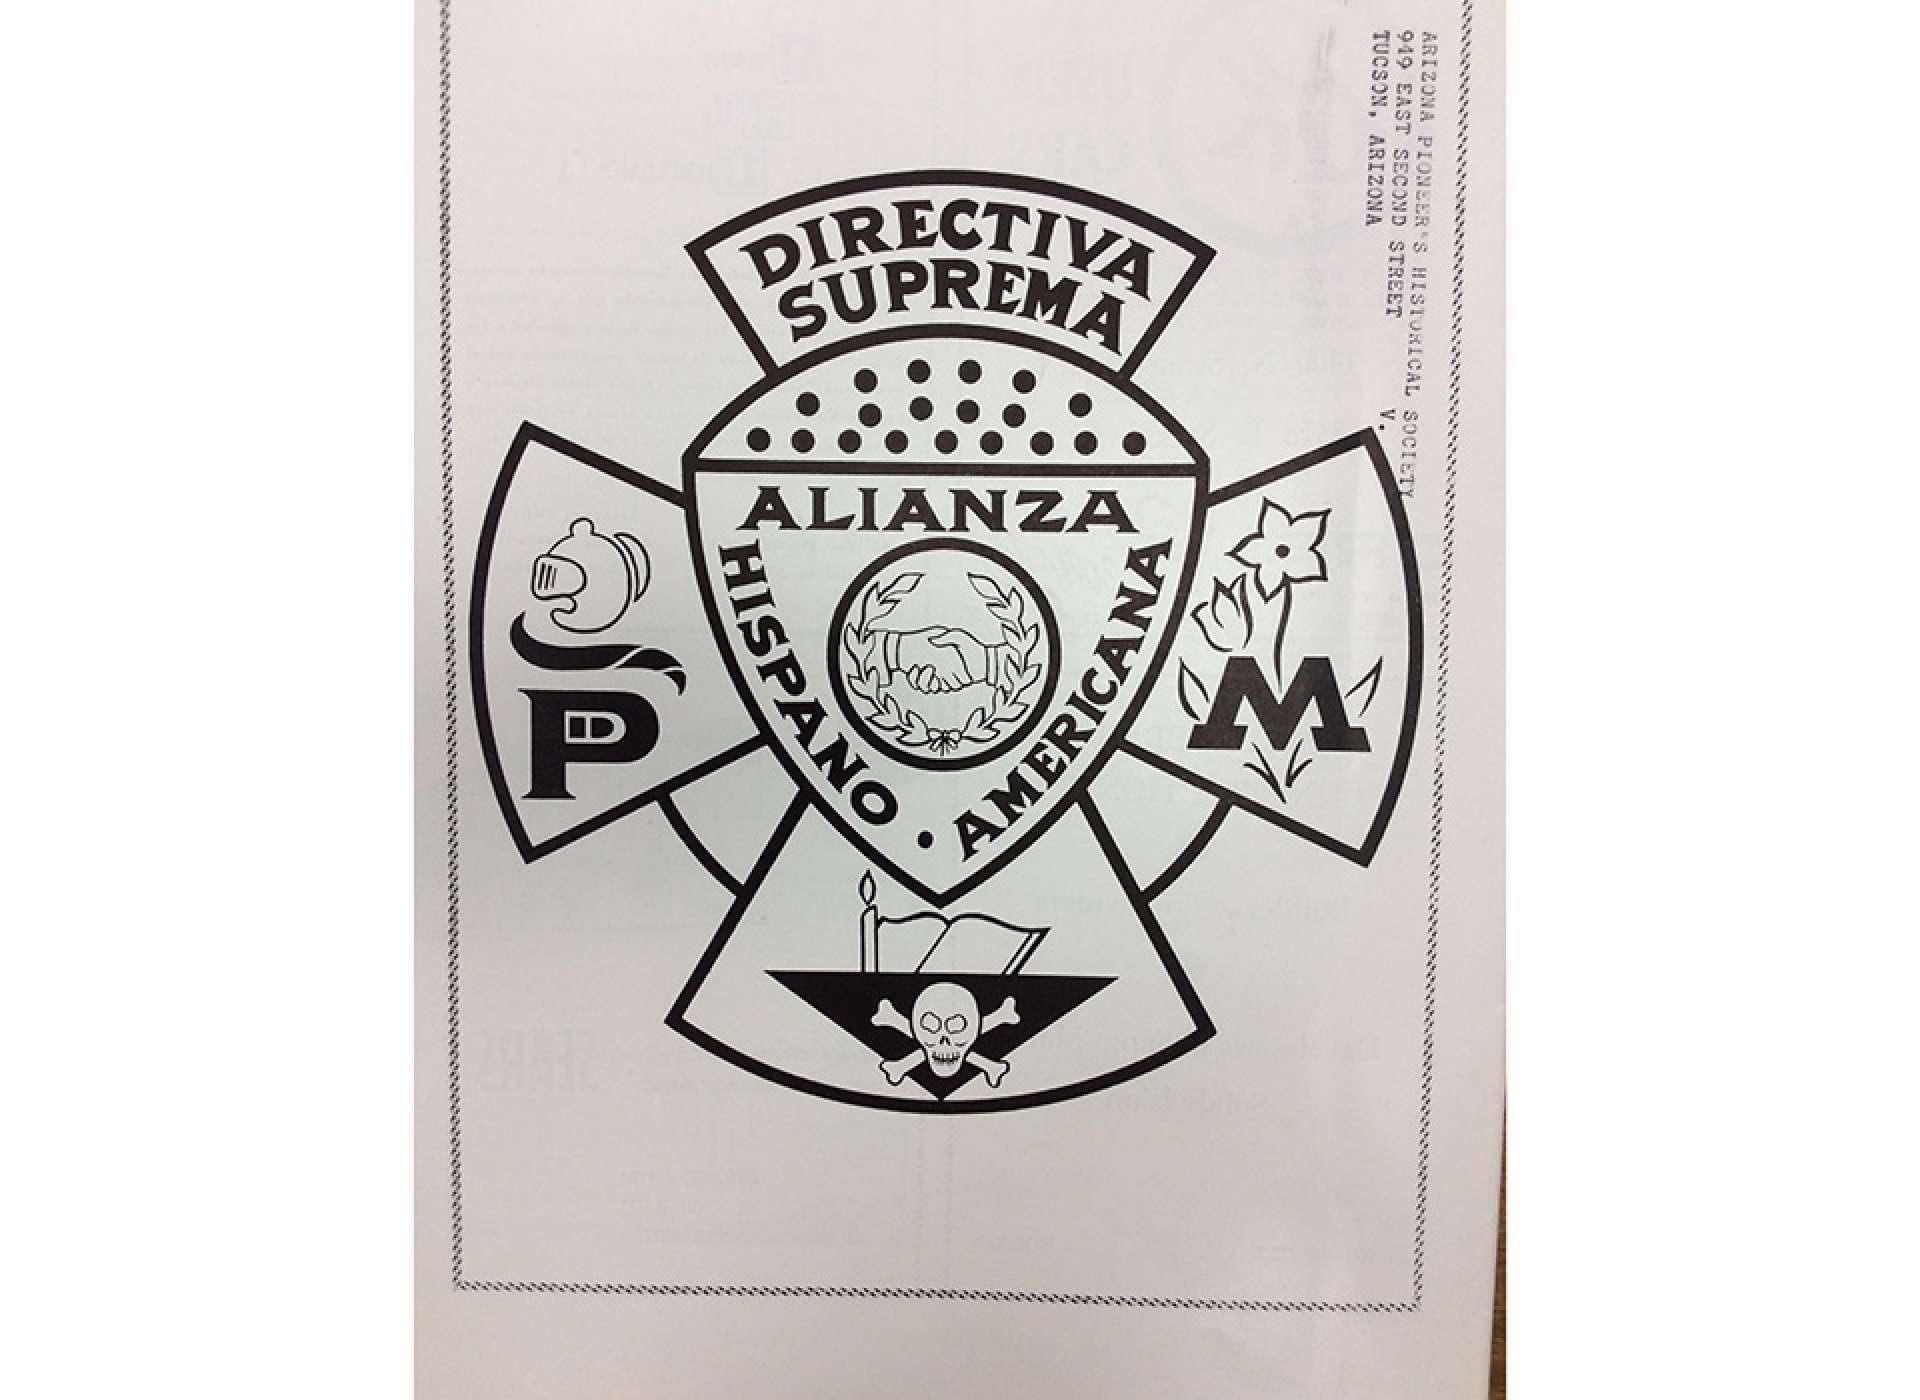 Alianza’s symbol for its Three Pillar Program: Protection, Instruction, and Morality.